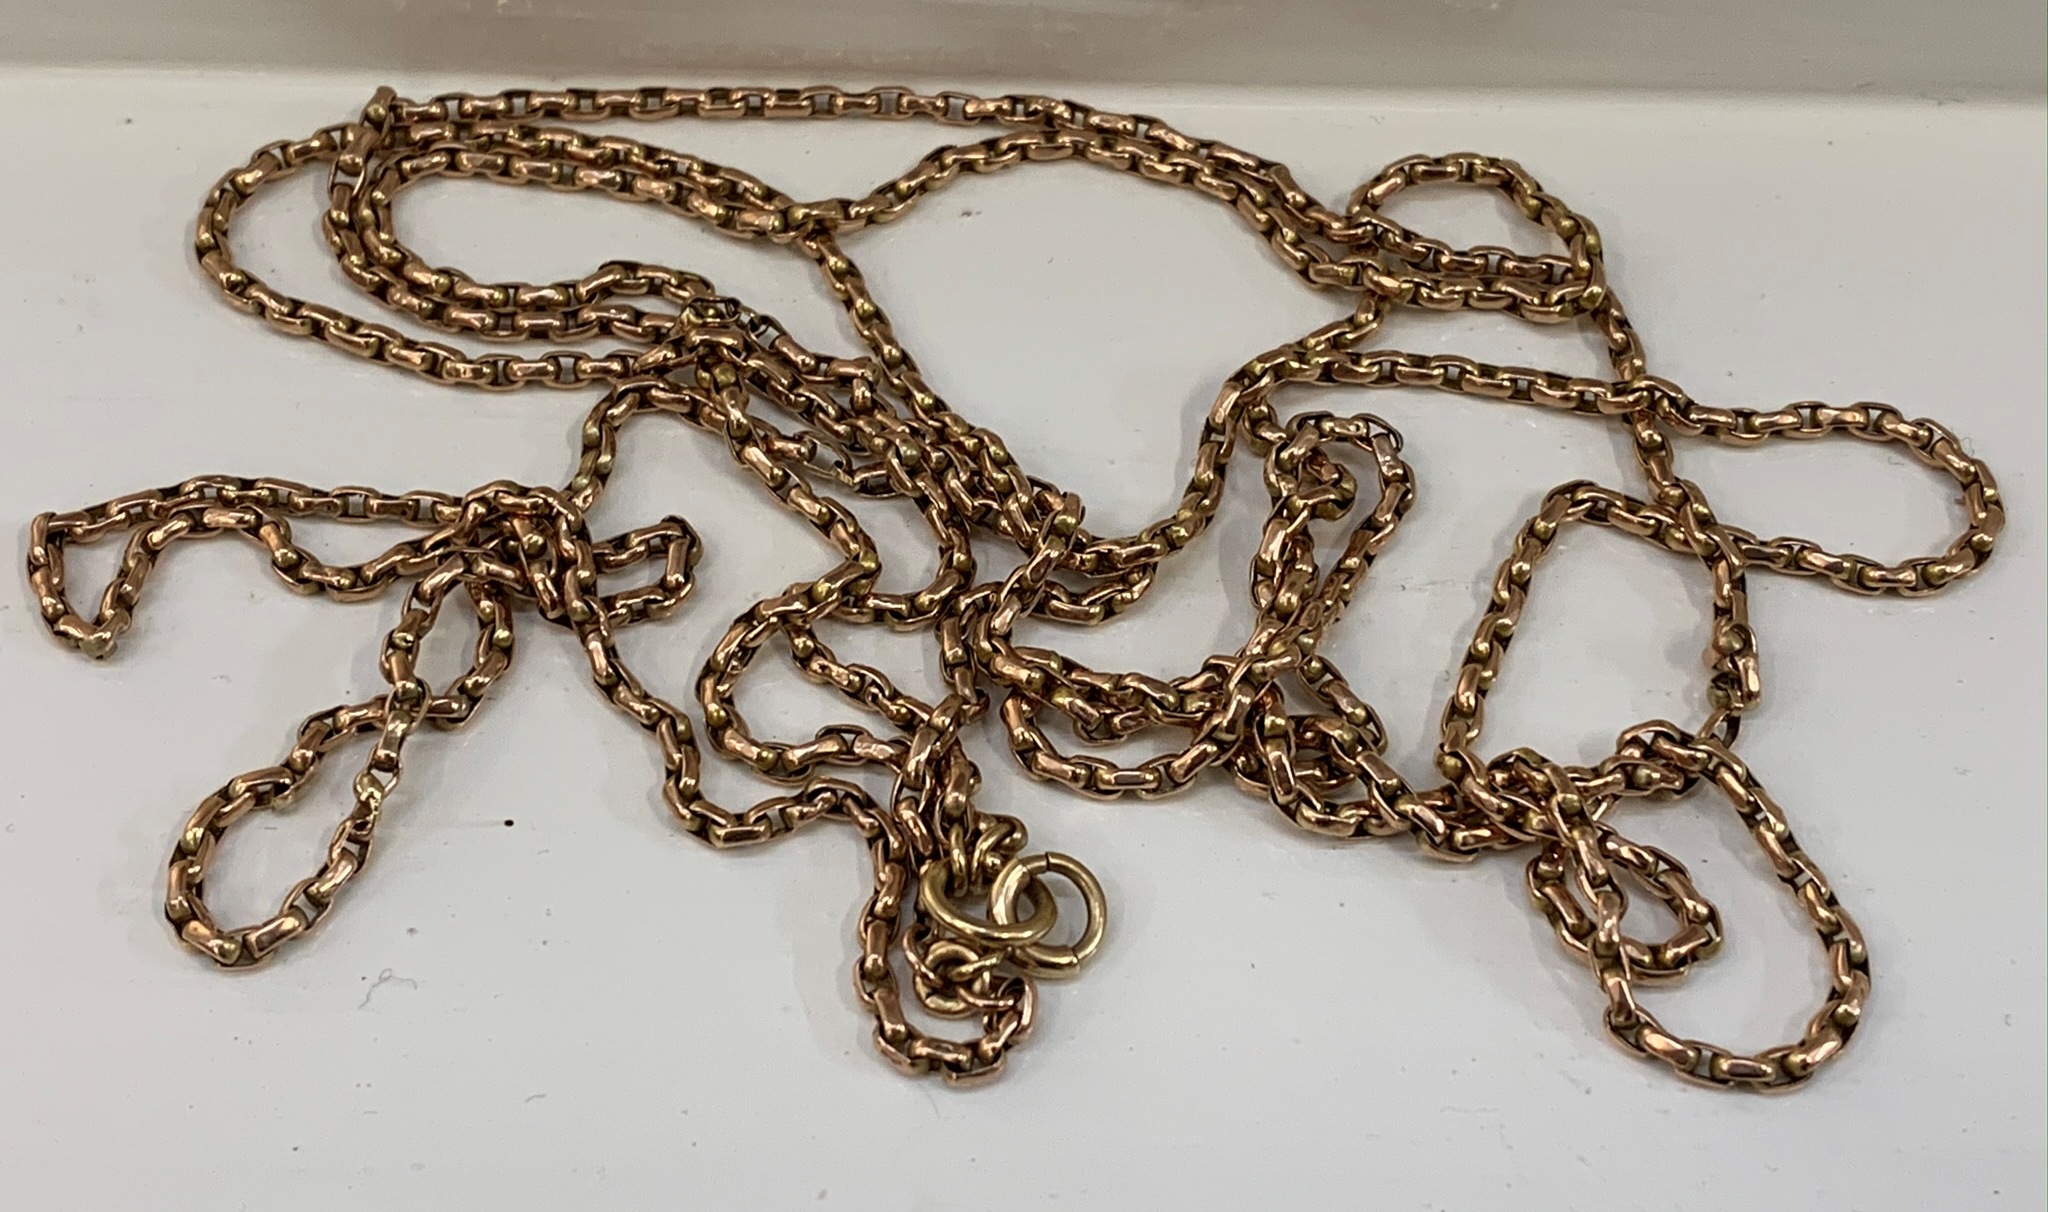 A 9ct gold longguard chain